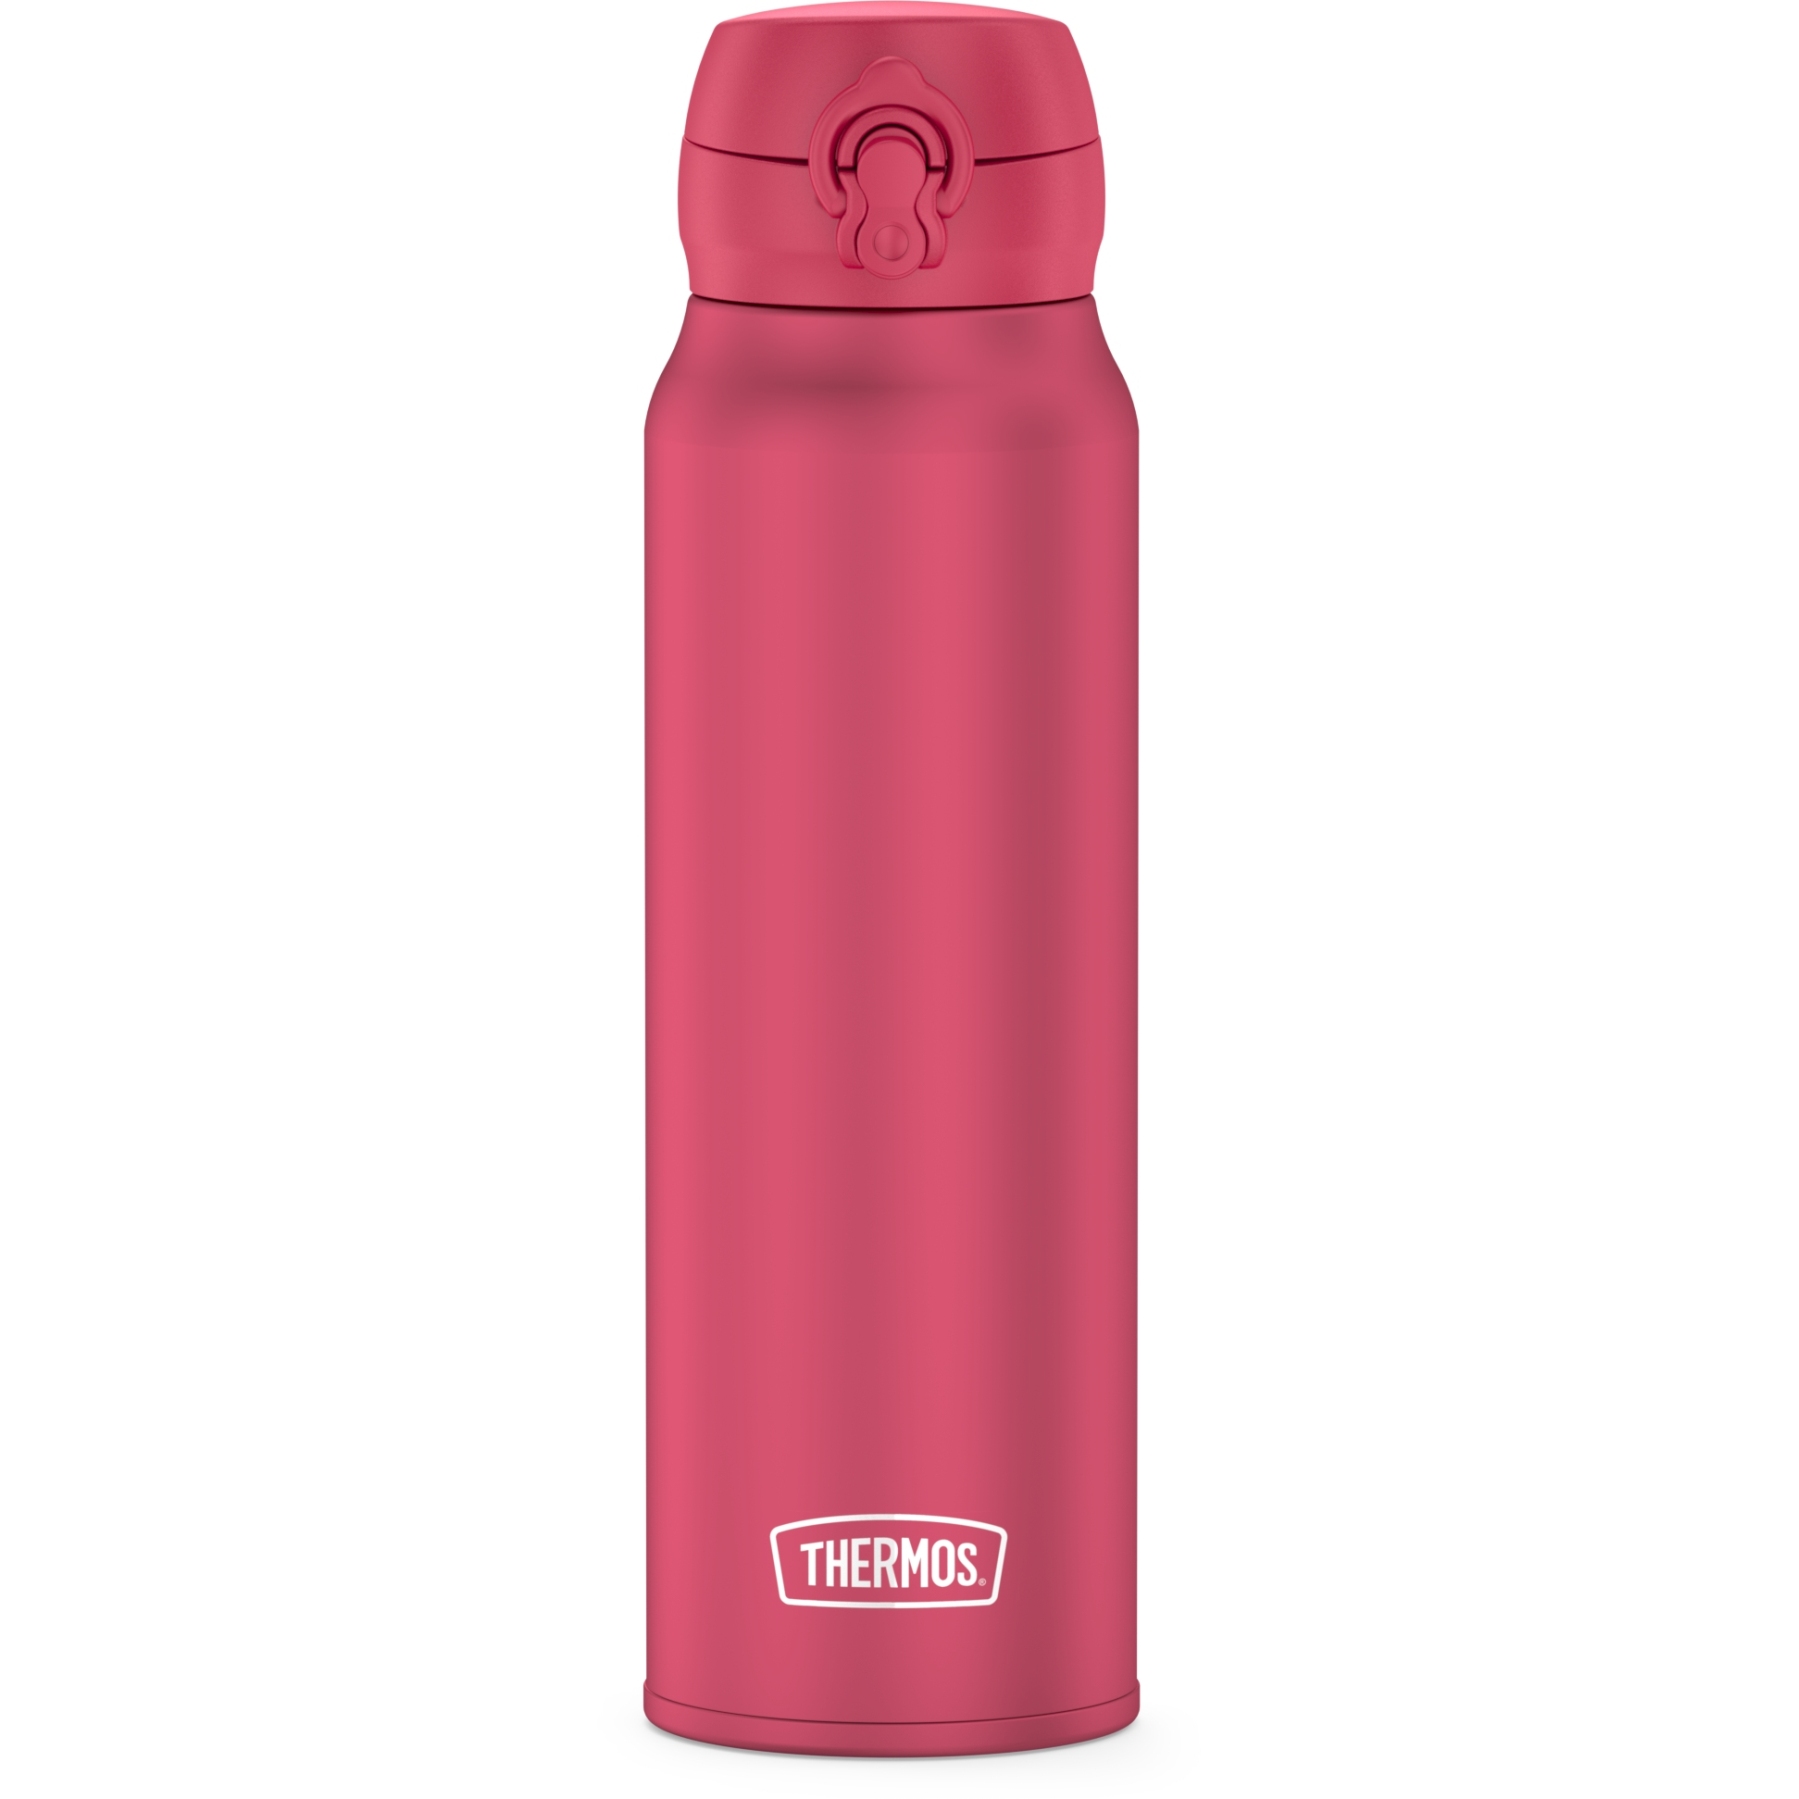 Produktbild von THERMOS® Ultralight Bottle Thermoflasche 0.75L - deep pink mat